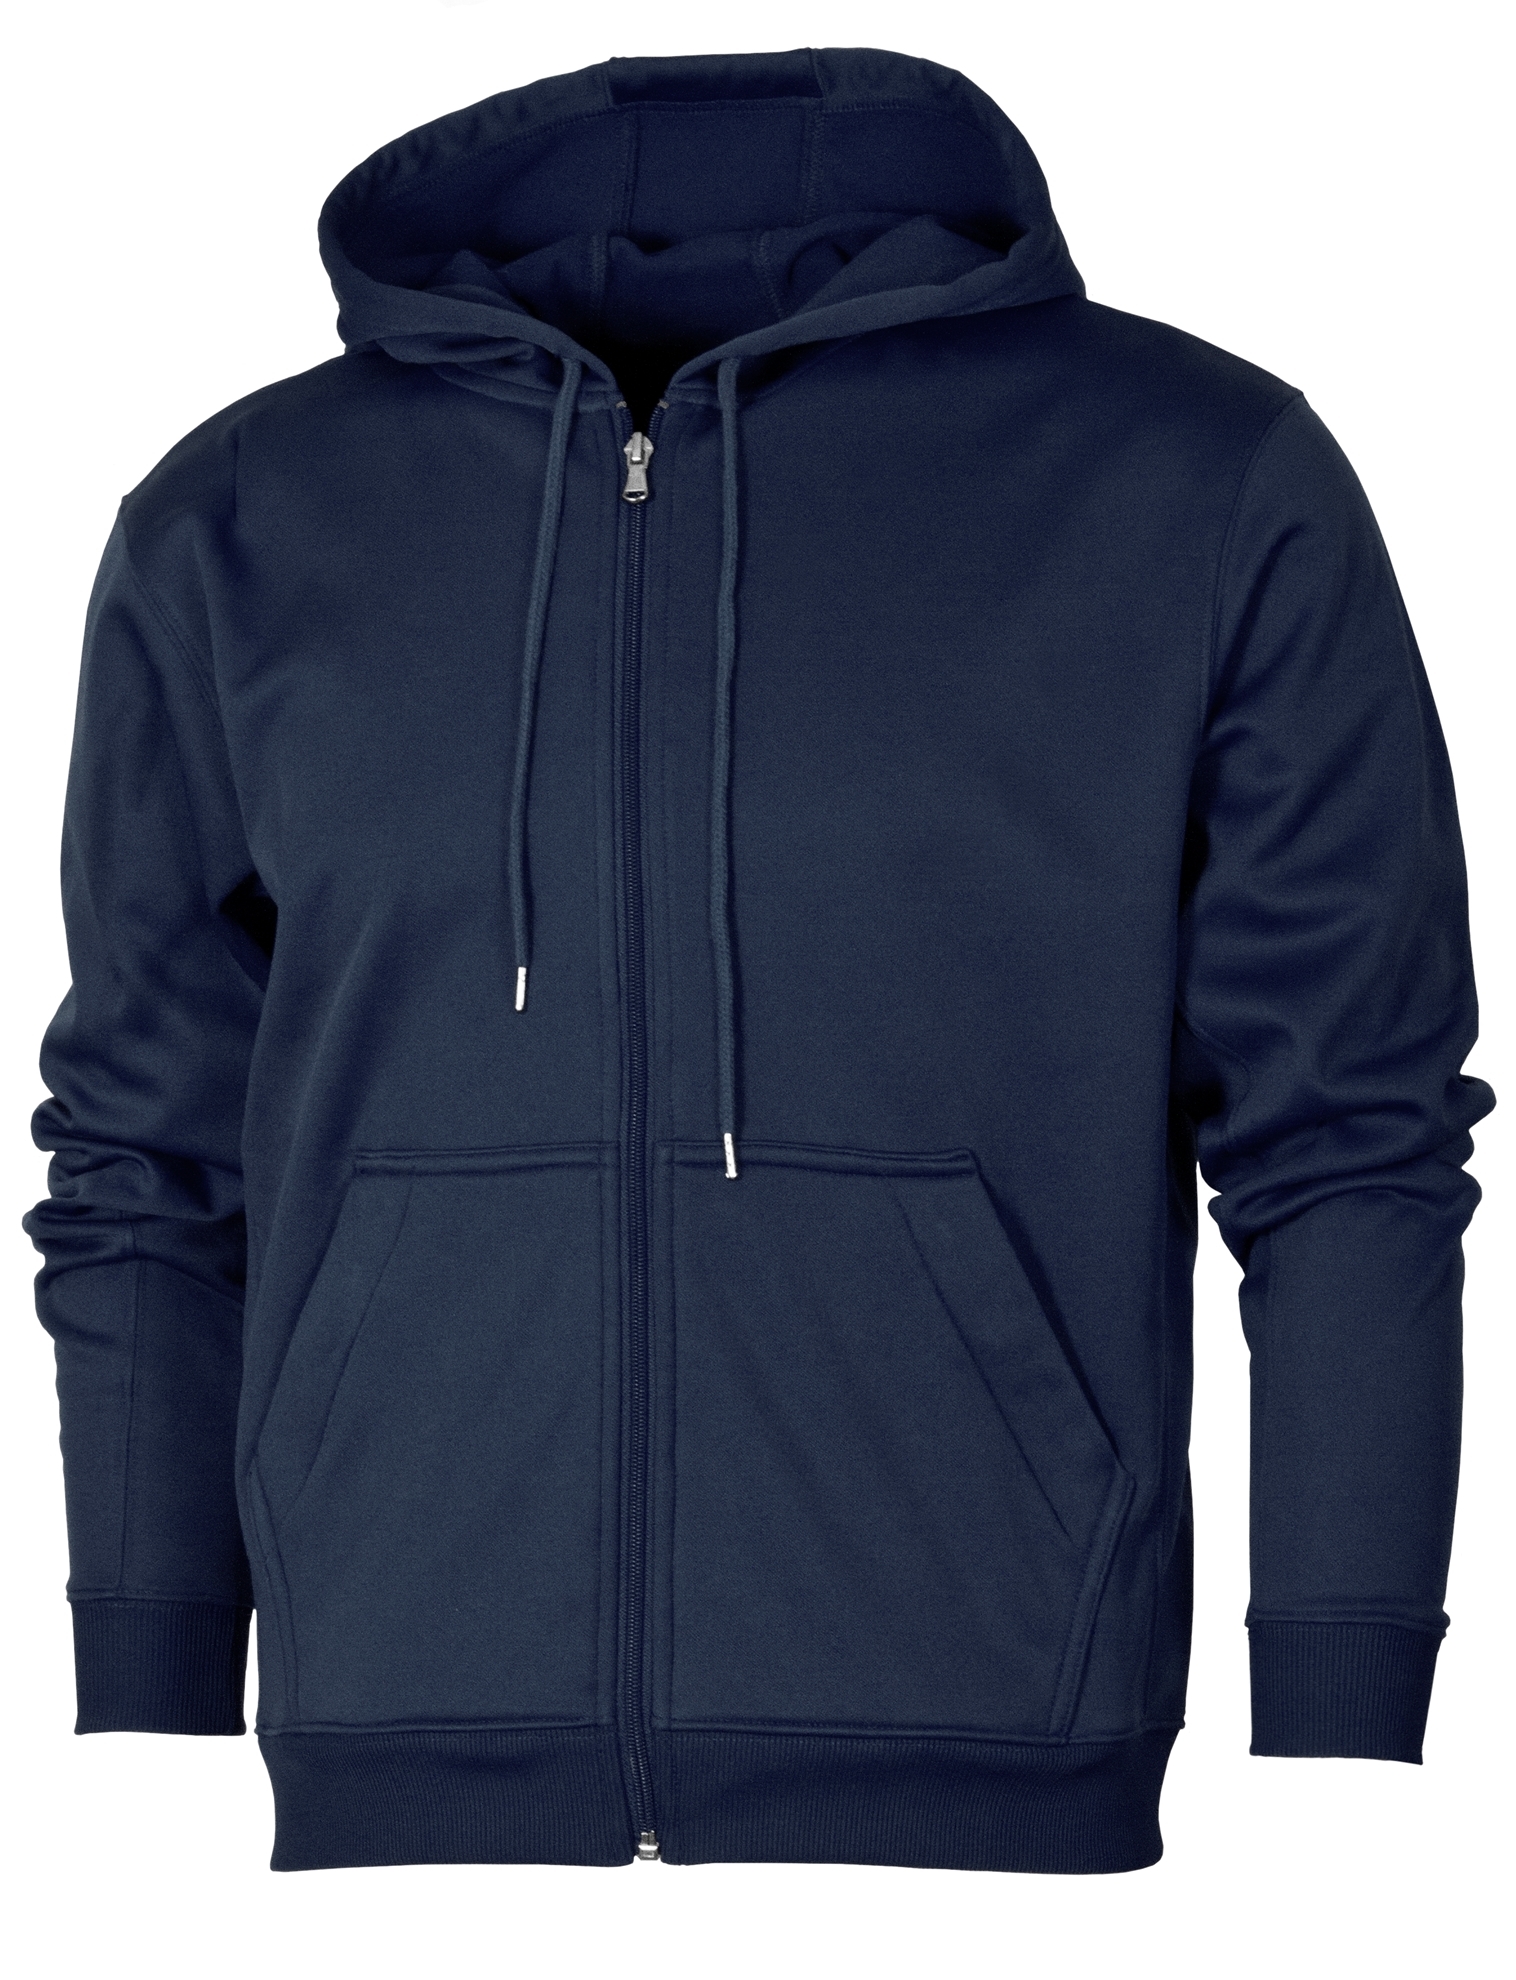 BAW Athletic Wear F160 - Adult Dry-Tek Full Zip Sweatshirt $24.50 -  Sweatshirts